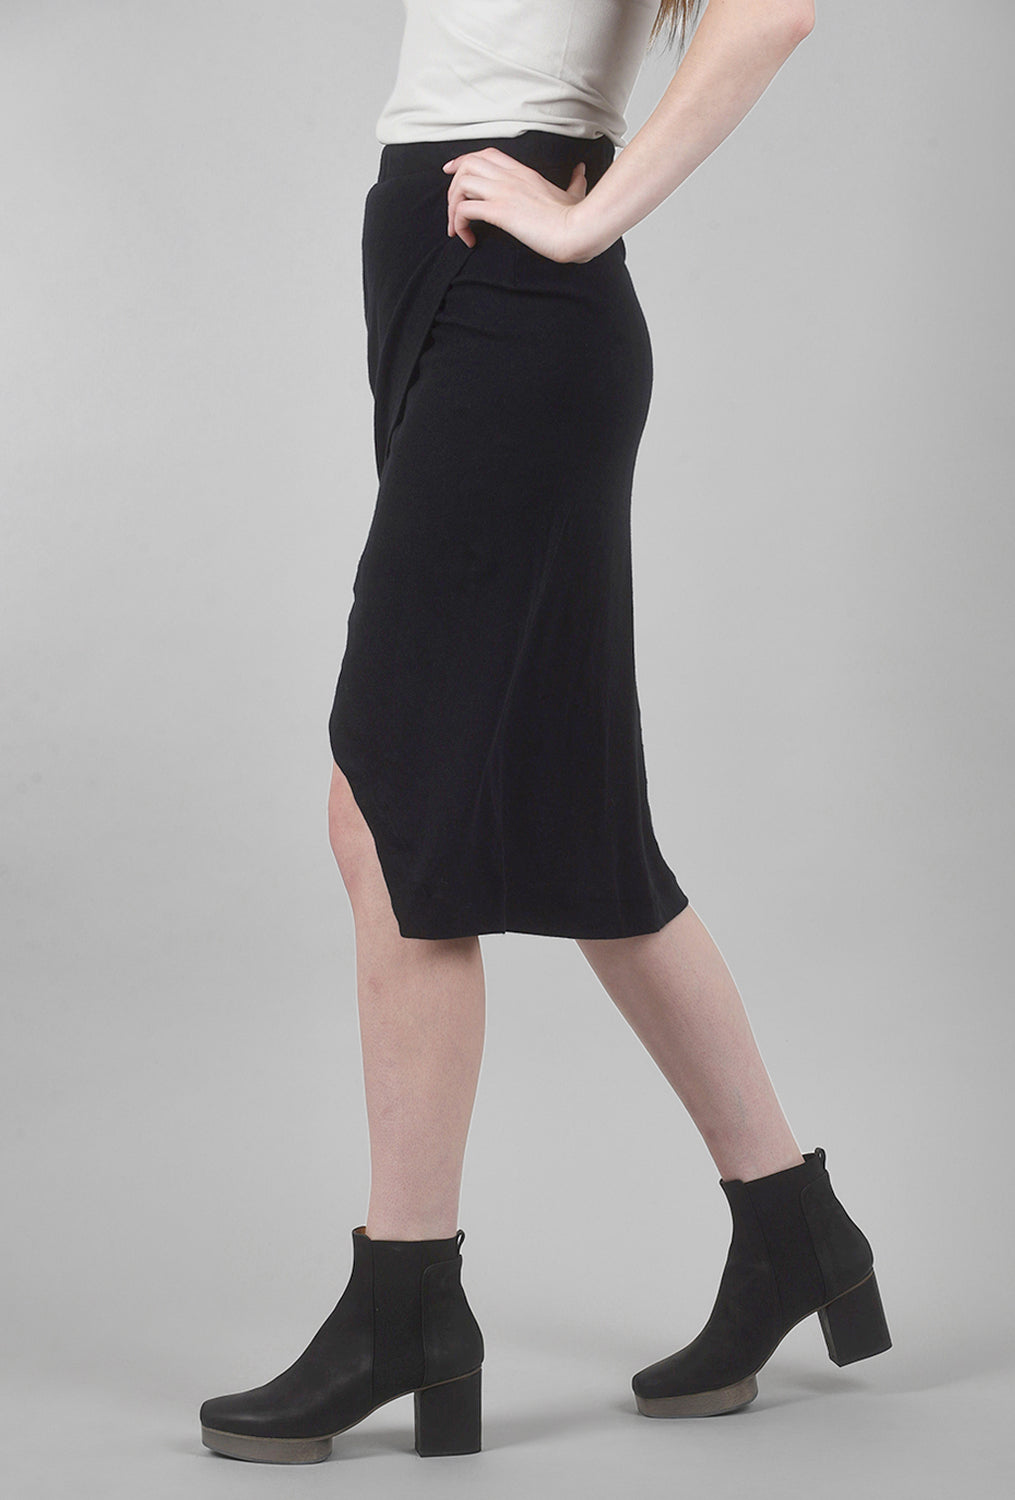 Enza Costa Cashmere Blend Midi Skirt, Black 